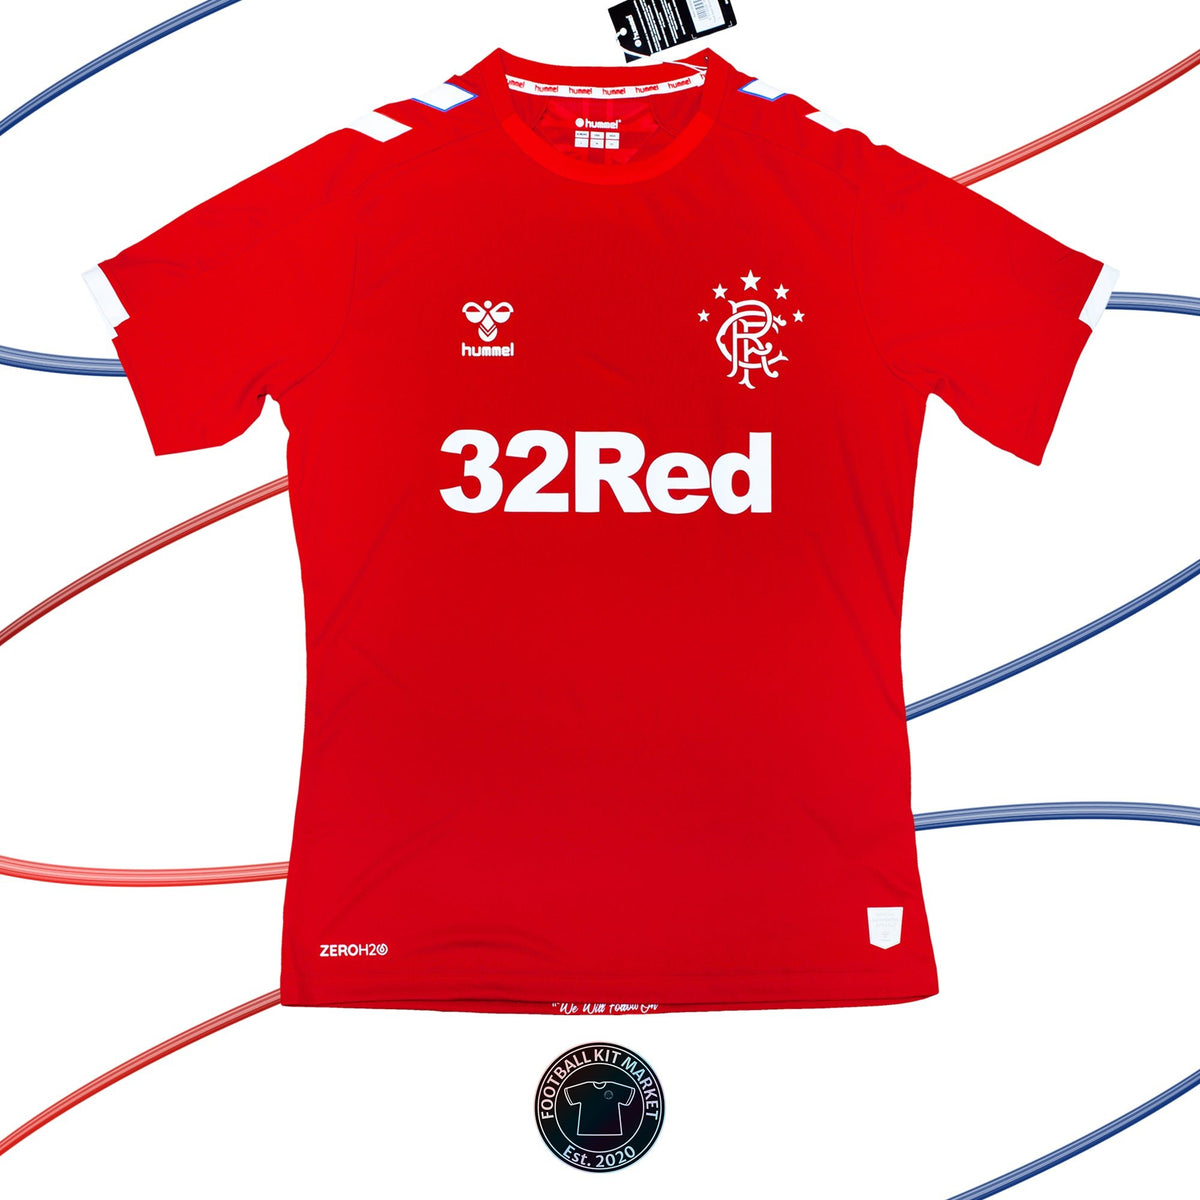 Genuine RANGERS 3rd Shirt (2019-2020) - HUMMEL (L) - Product Image from Football Kit Market